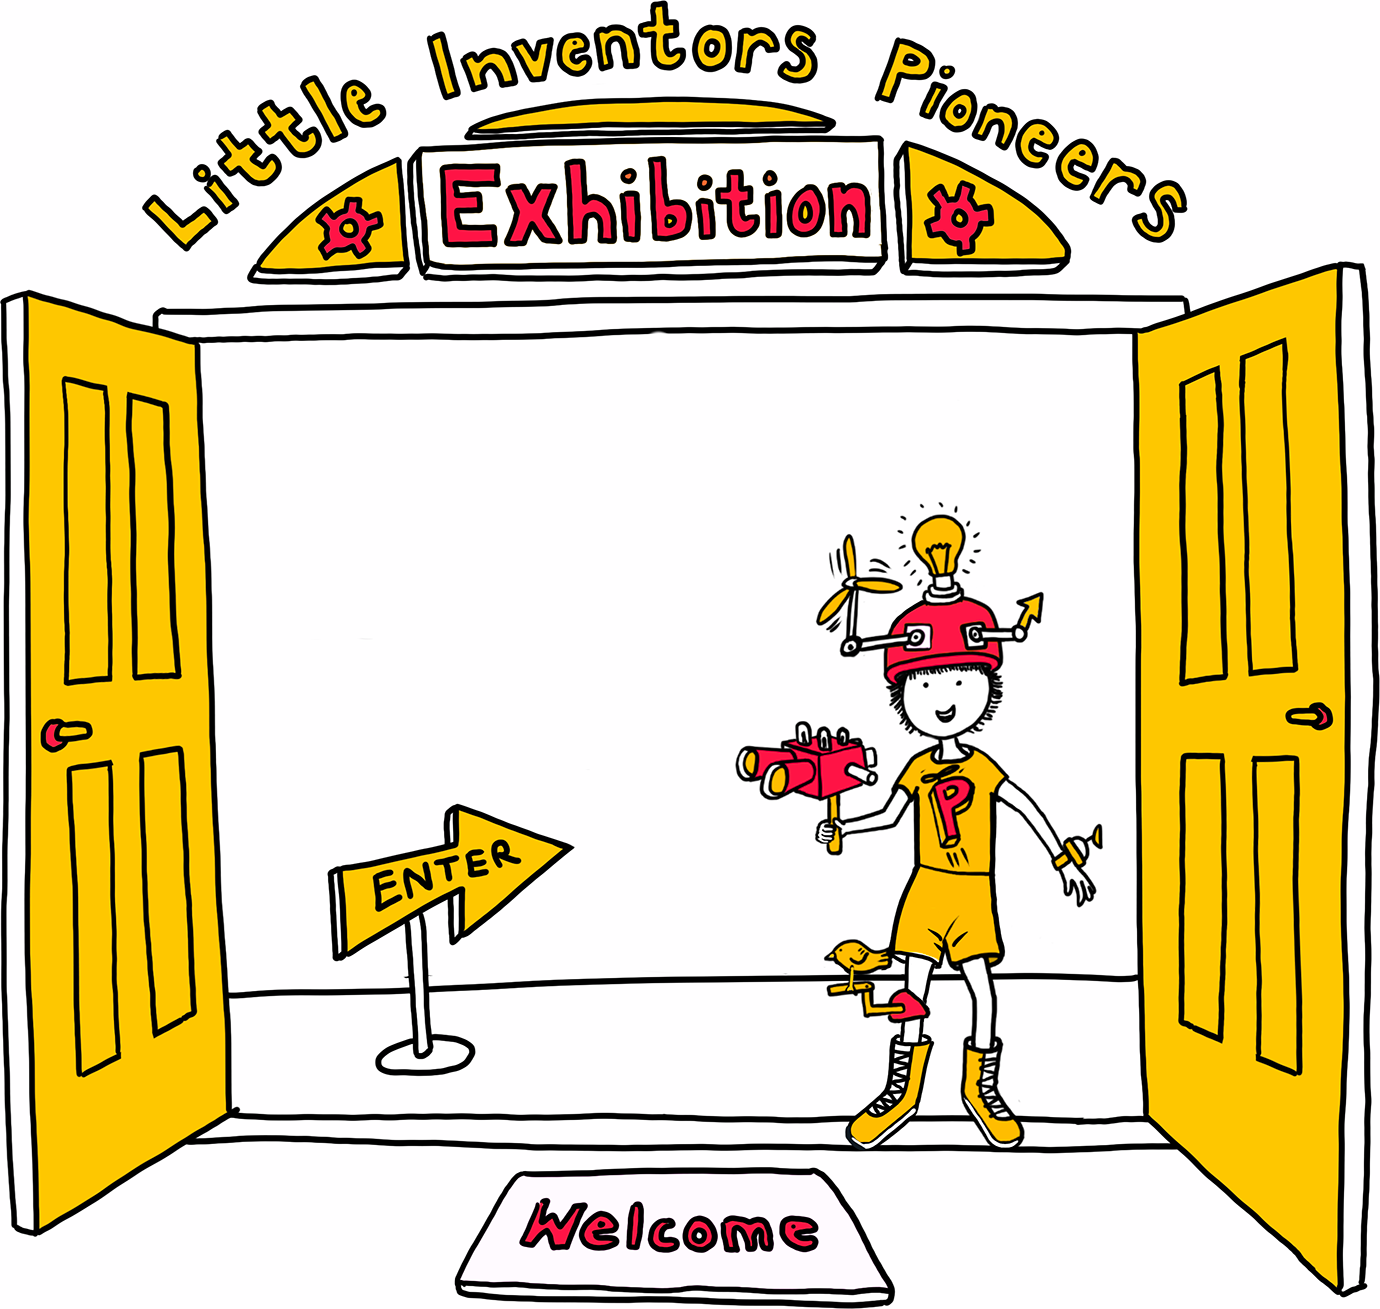 Enter the Little Inventors Pioneers Exhibition